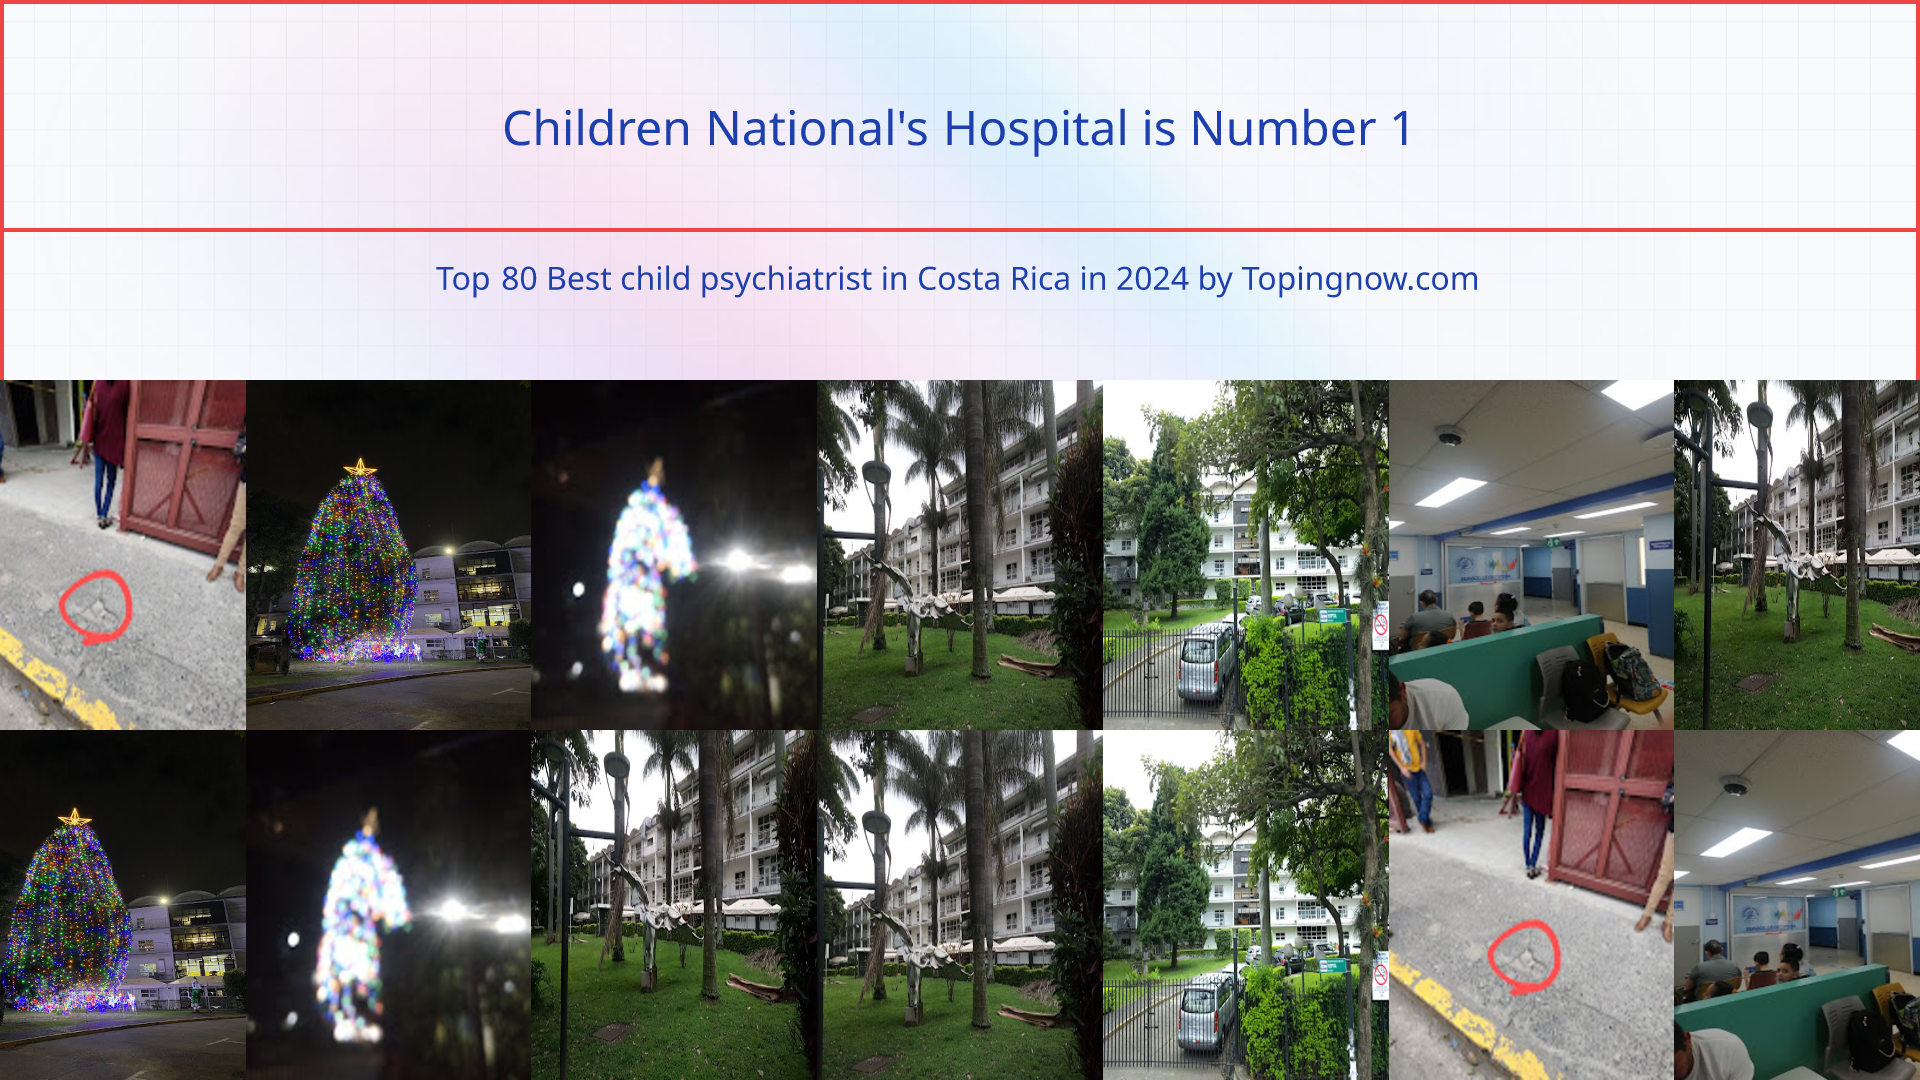 Children National's Hospital: Top 80 Best child psychiatrist in Costa Rica in 2024